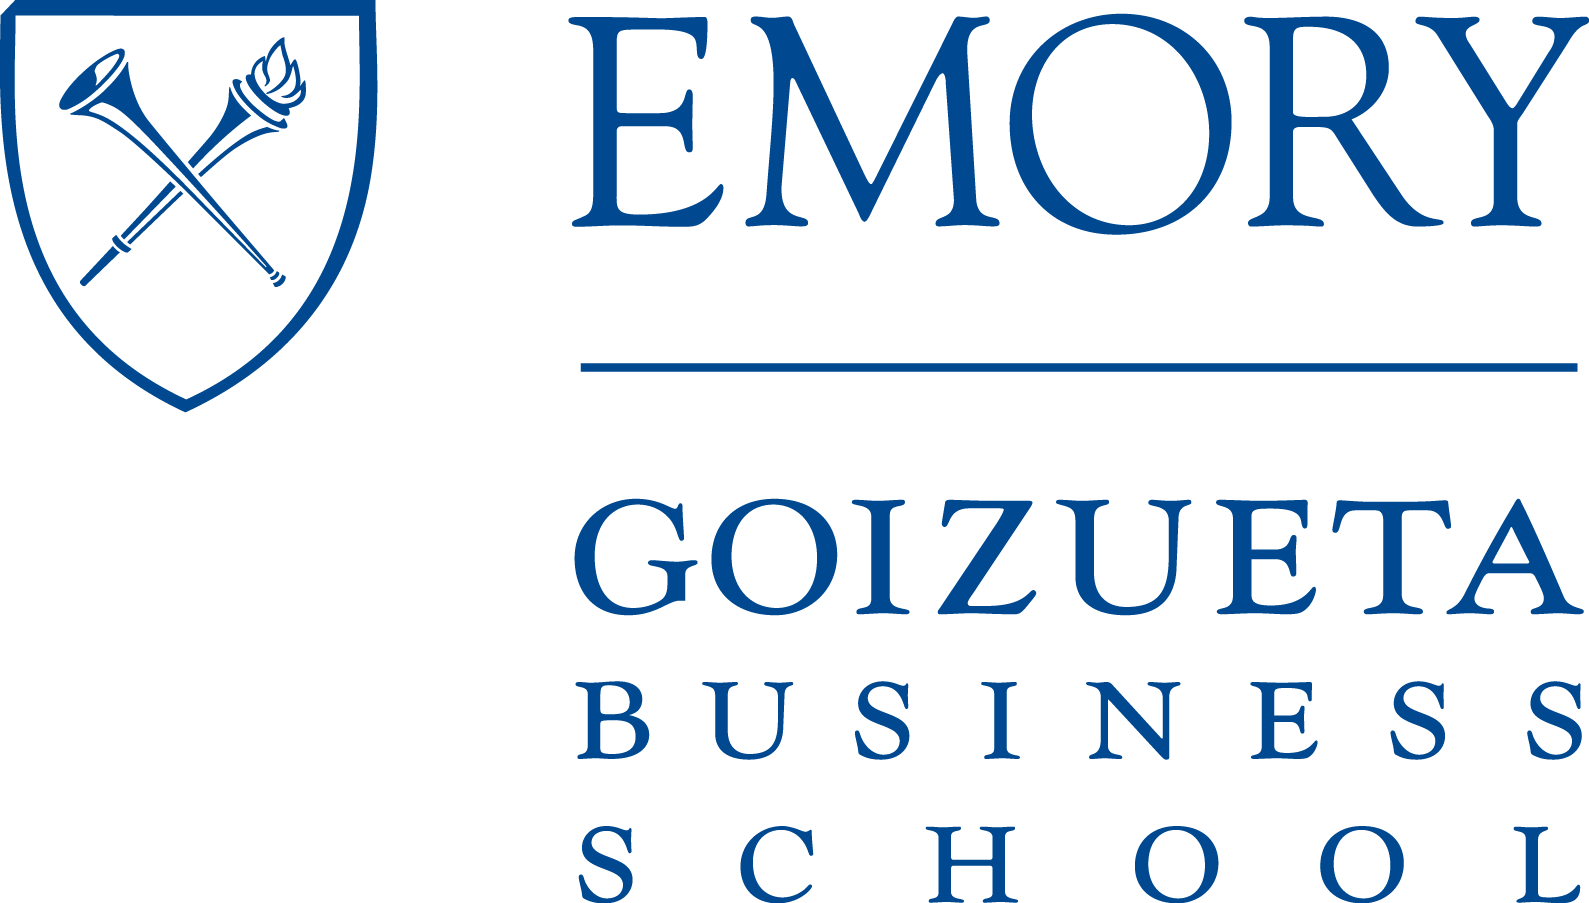 Emory Business Online Michelle Valigursky Goizueta Business School Klaas Baks Mark Bell Steven Jasmin